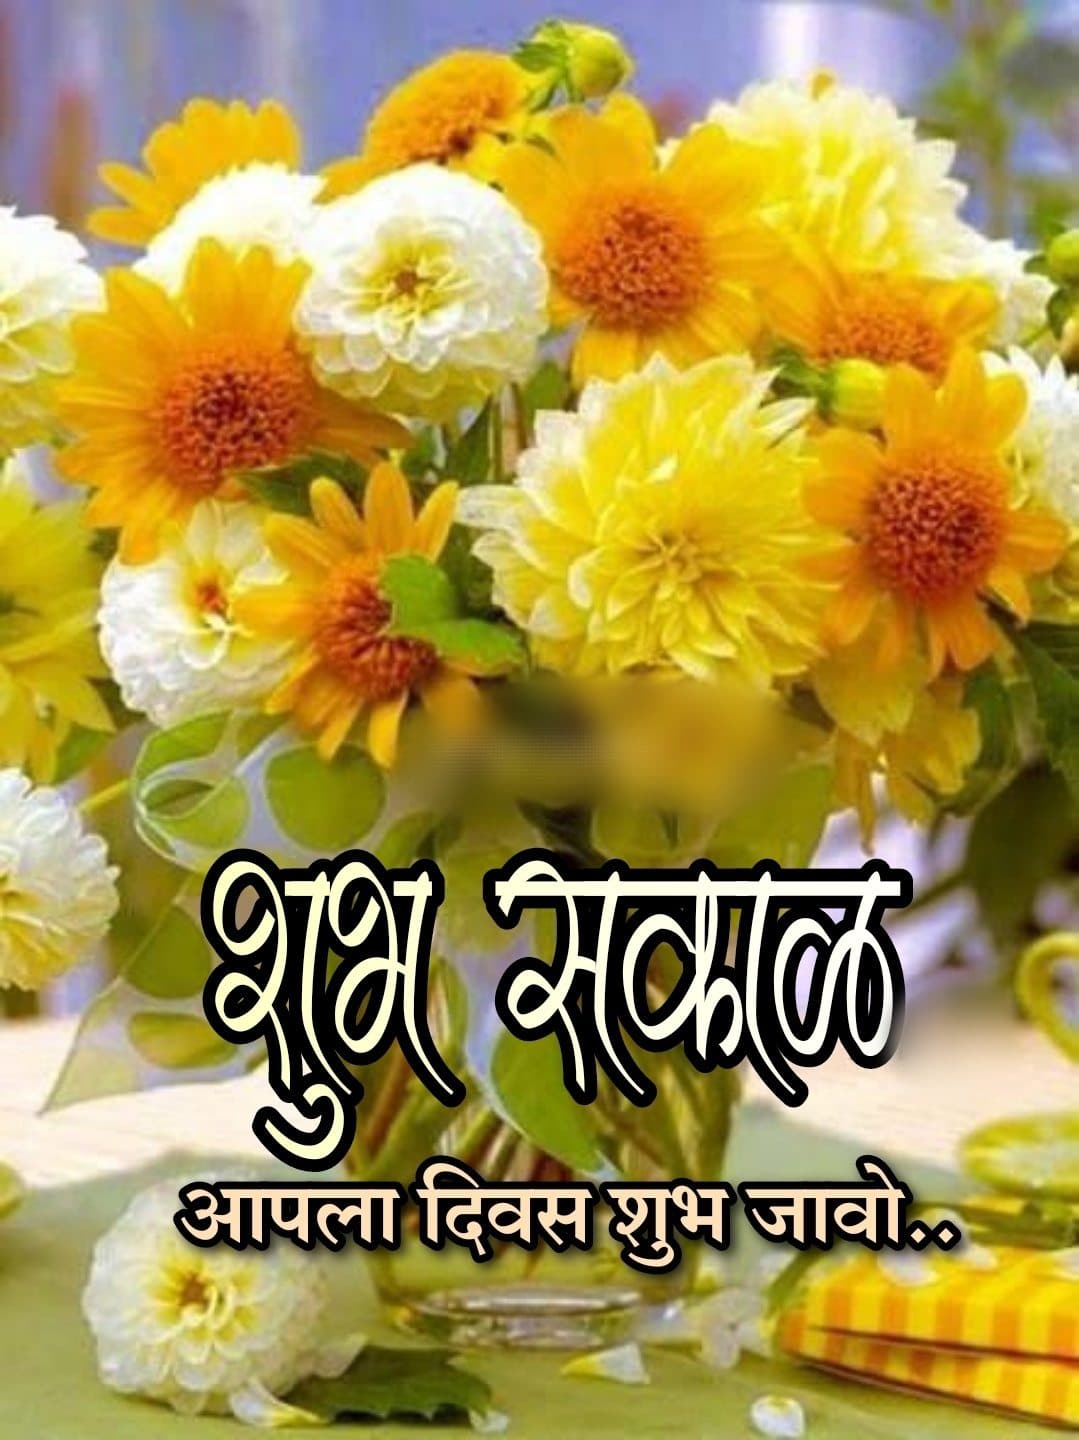 Shubh Sakal Flower Images (34)